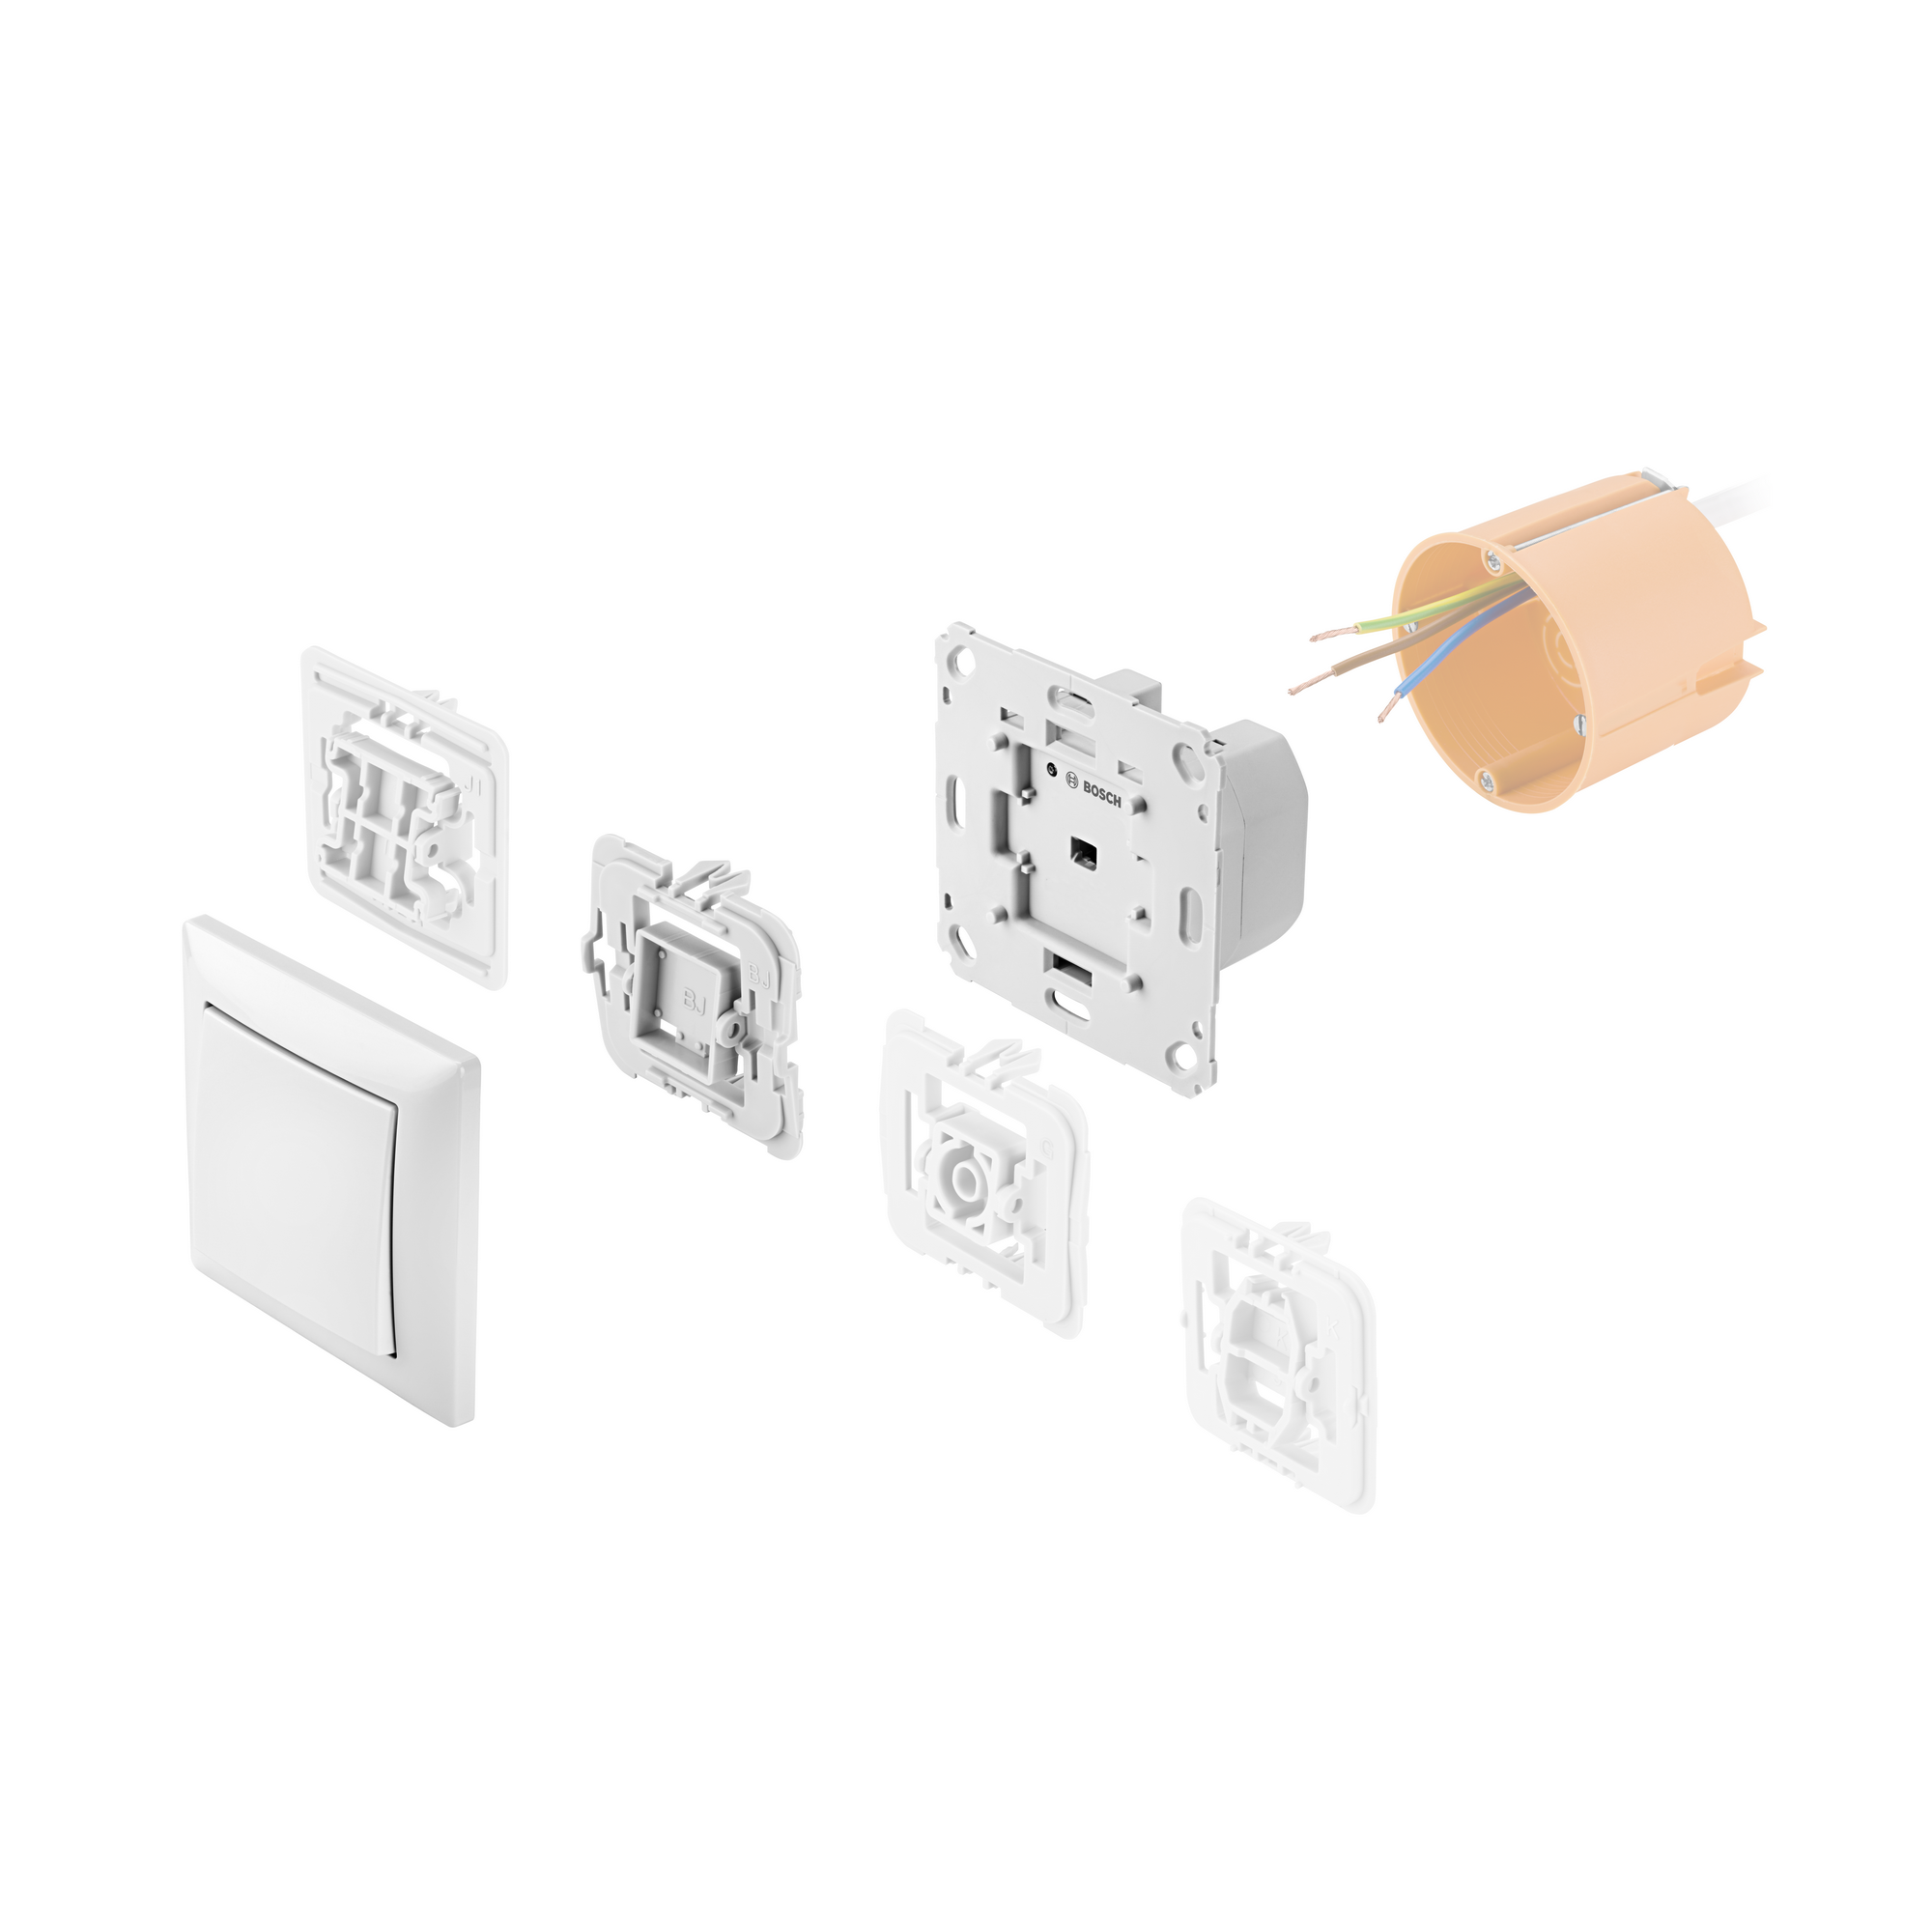 Smart Home Adapter-Set für Gira-Standard-Schalterserien, 3 Stück + product picture